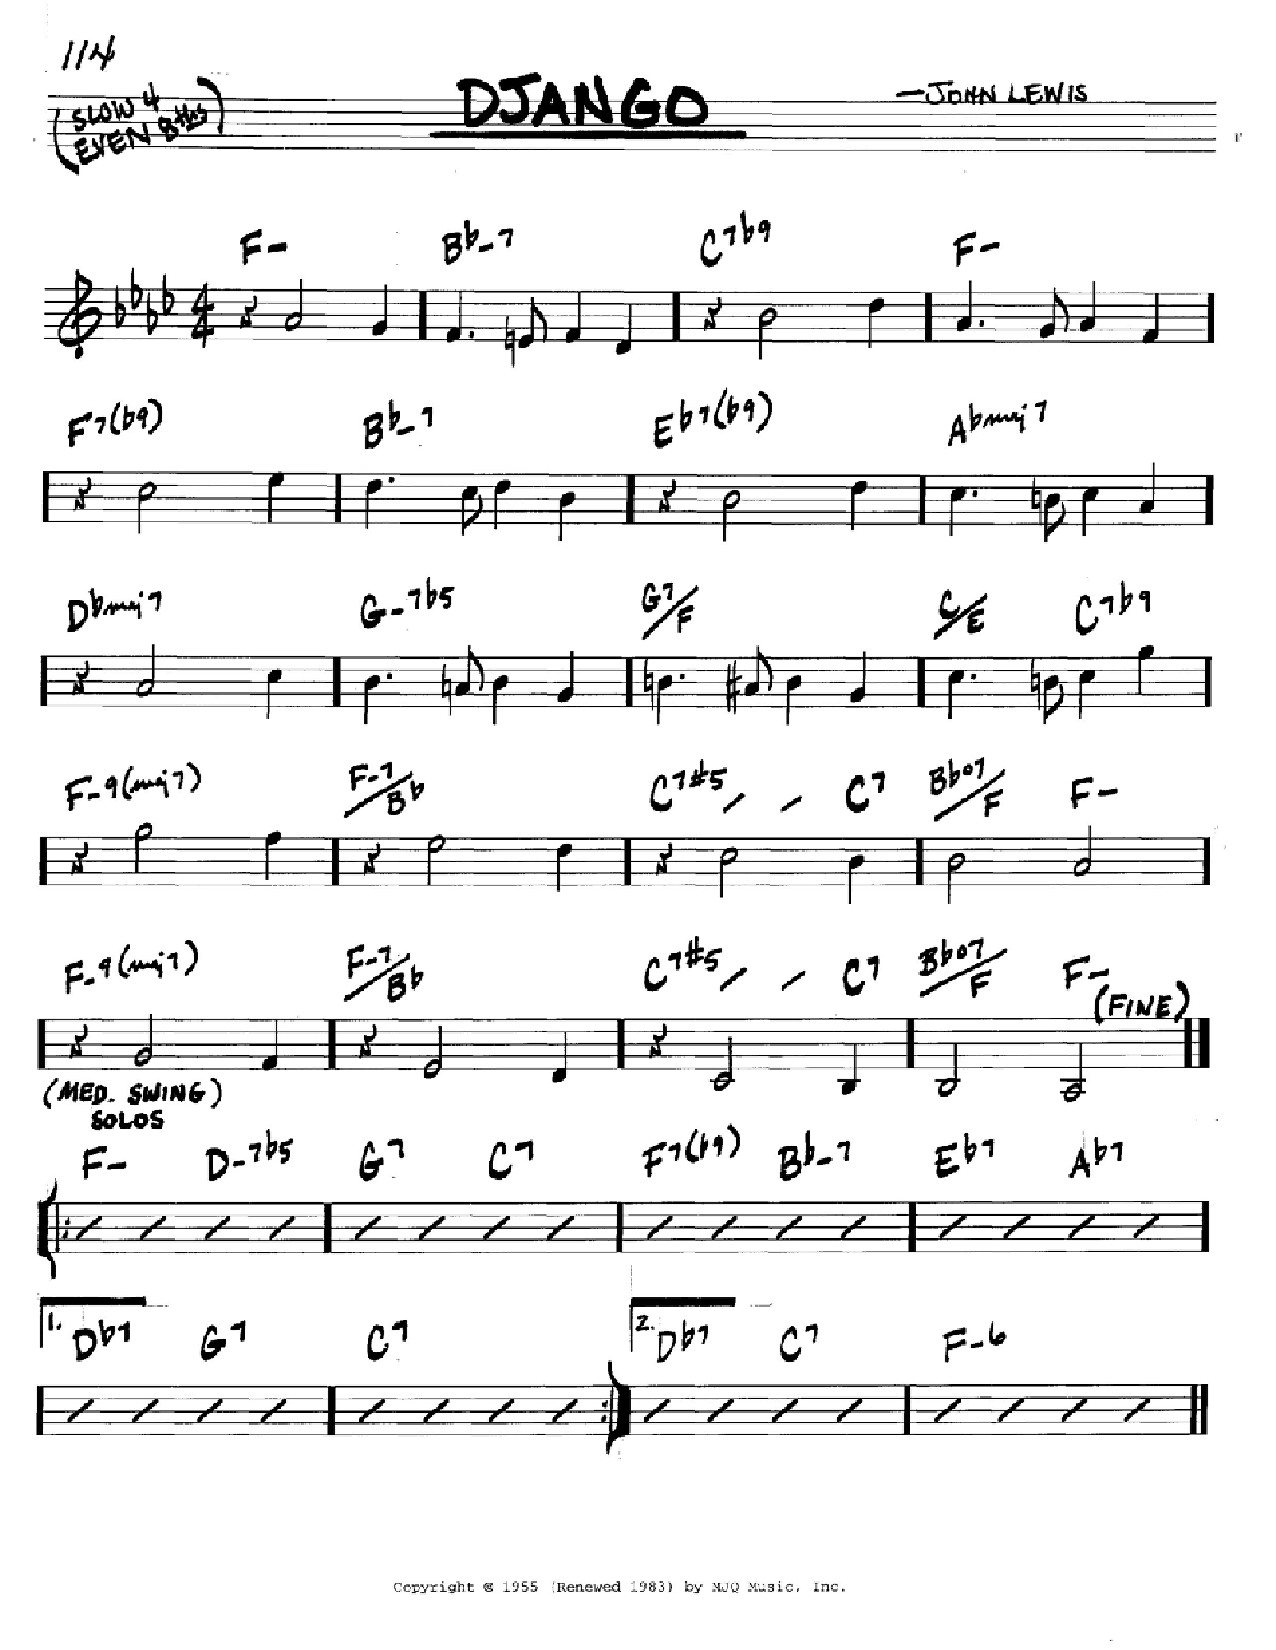 John Lewis Django Sheet Music Notes & Chords for Piano Solo - Download or Print PDF